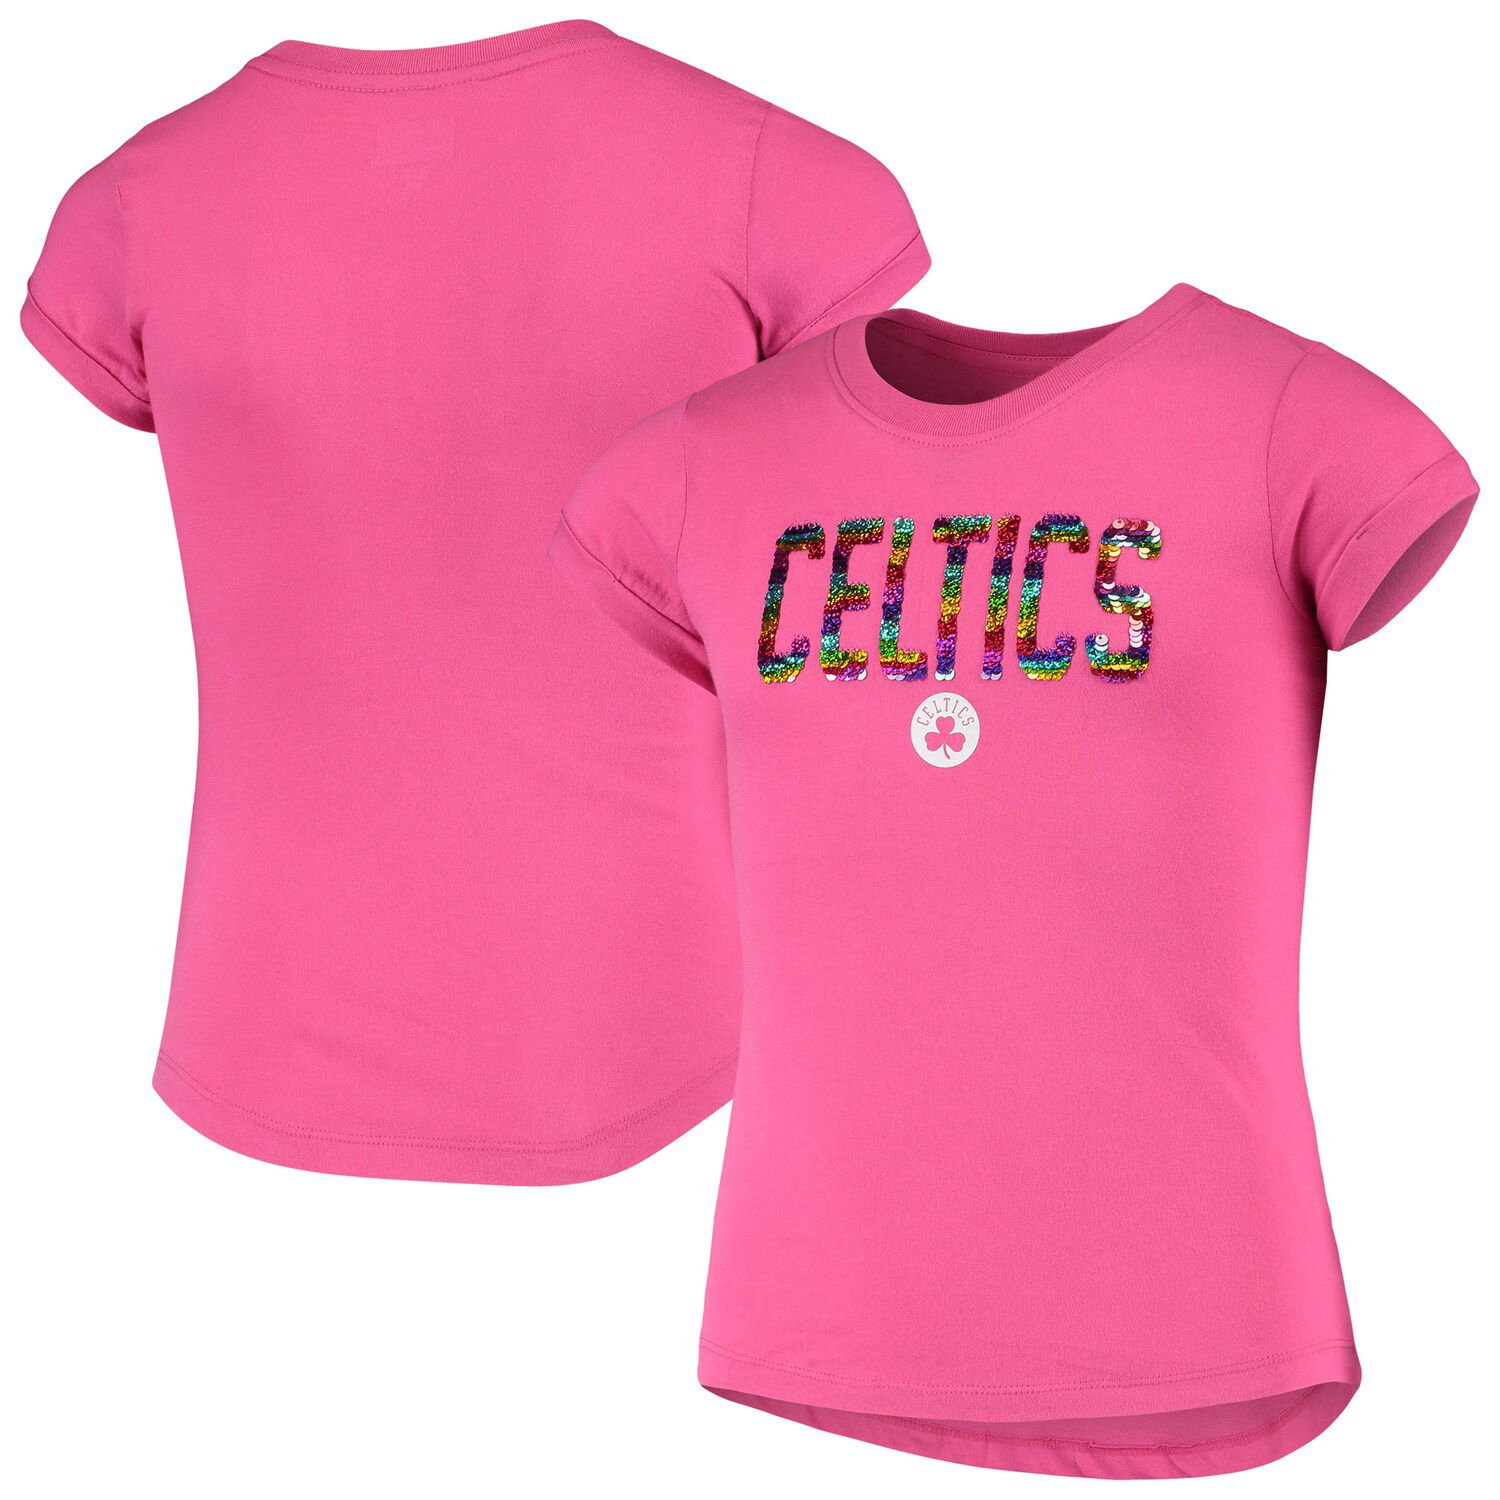 celtics pink jersey